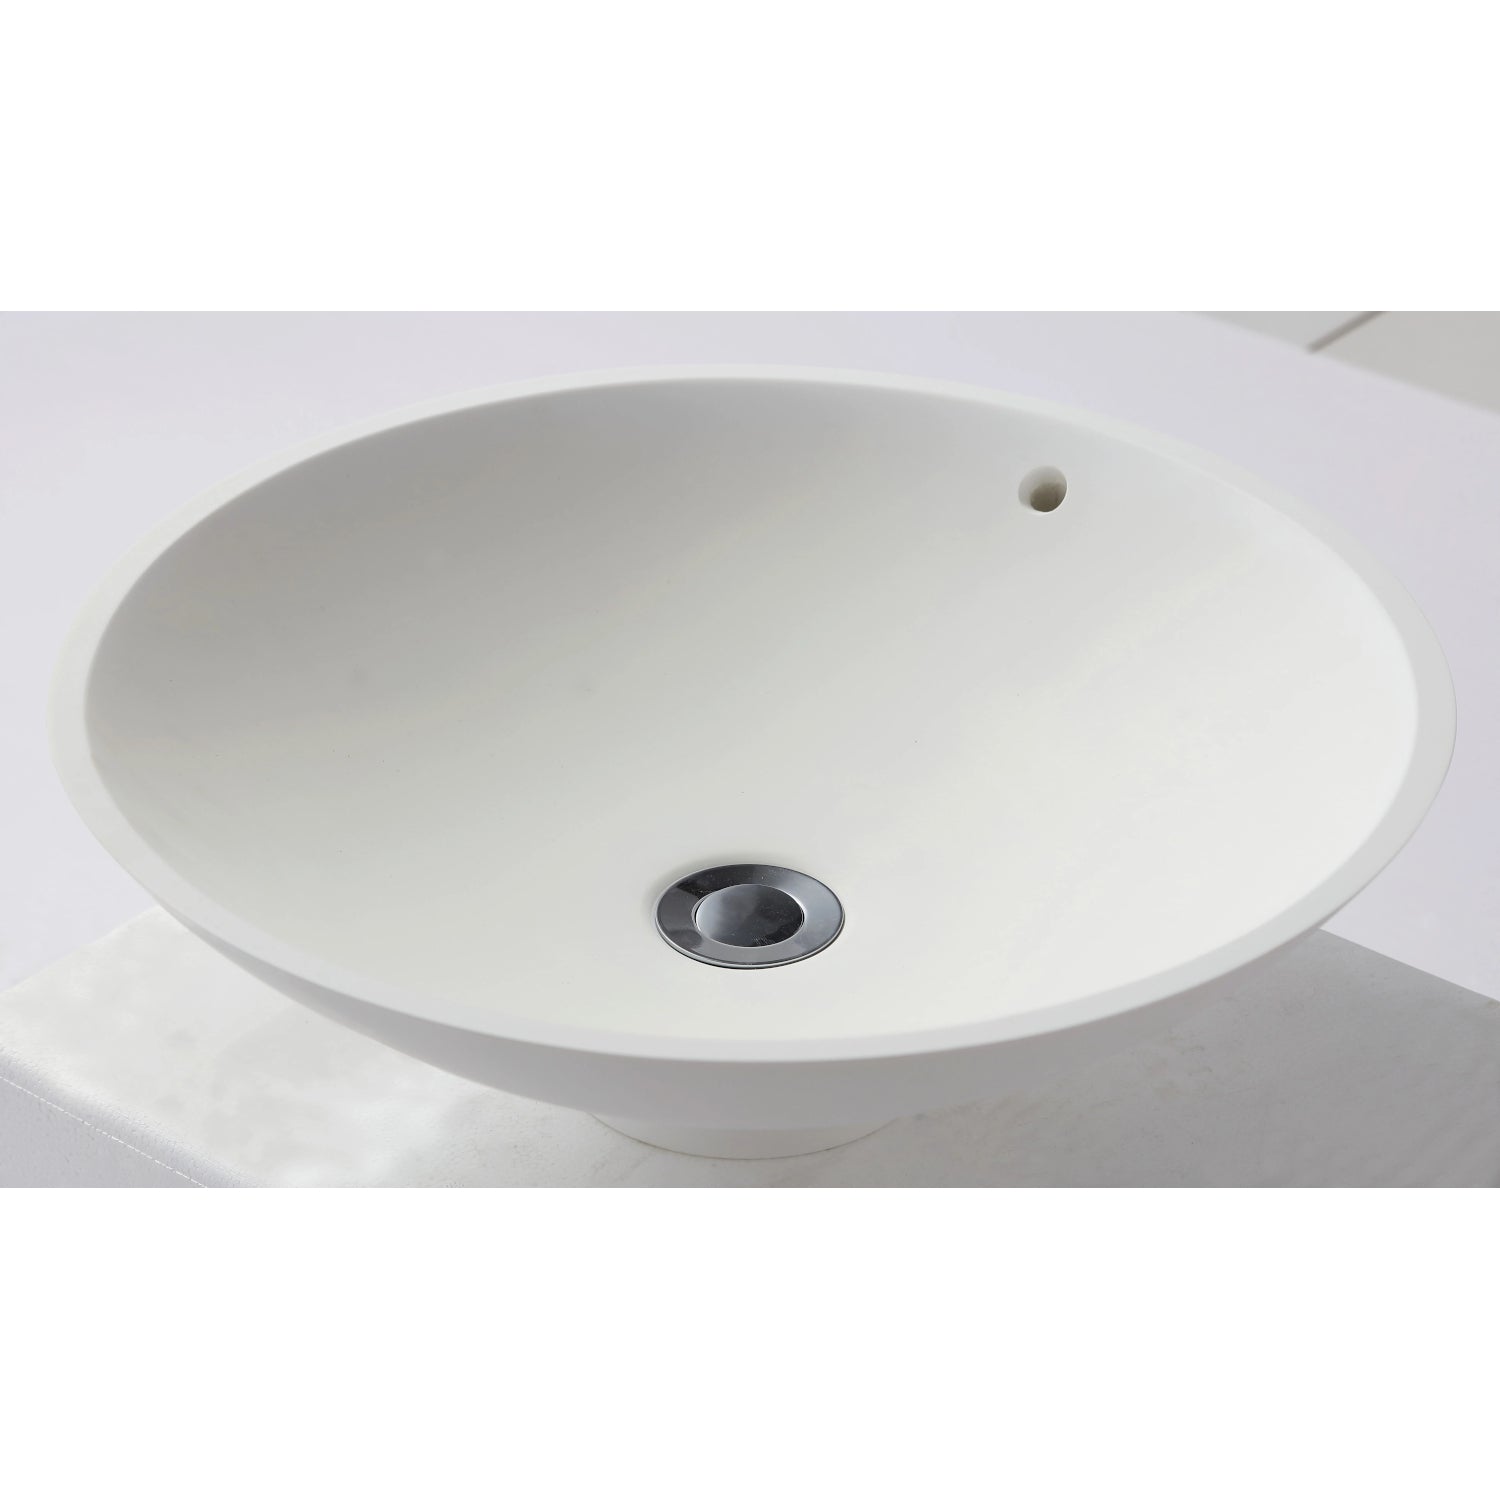 Solid Surface Basin GX - Elegant Bathroom Fixture GX108